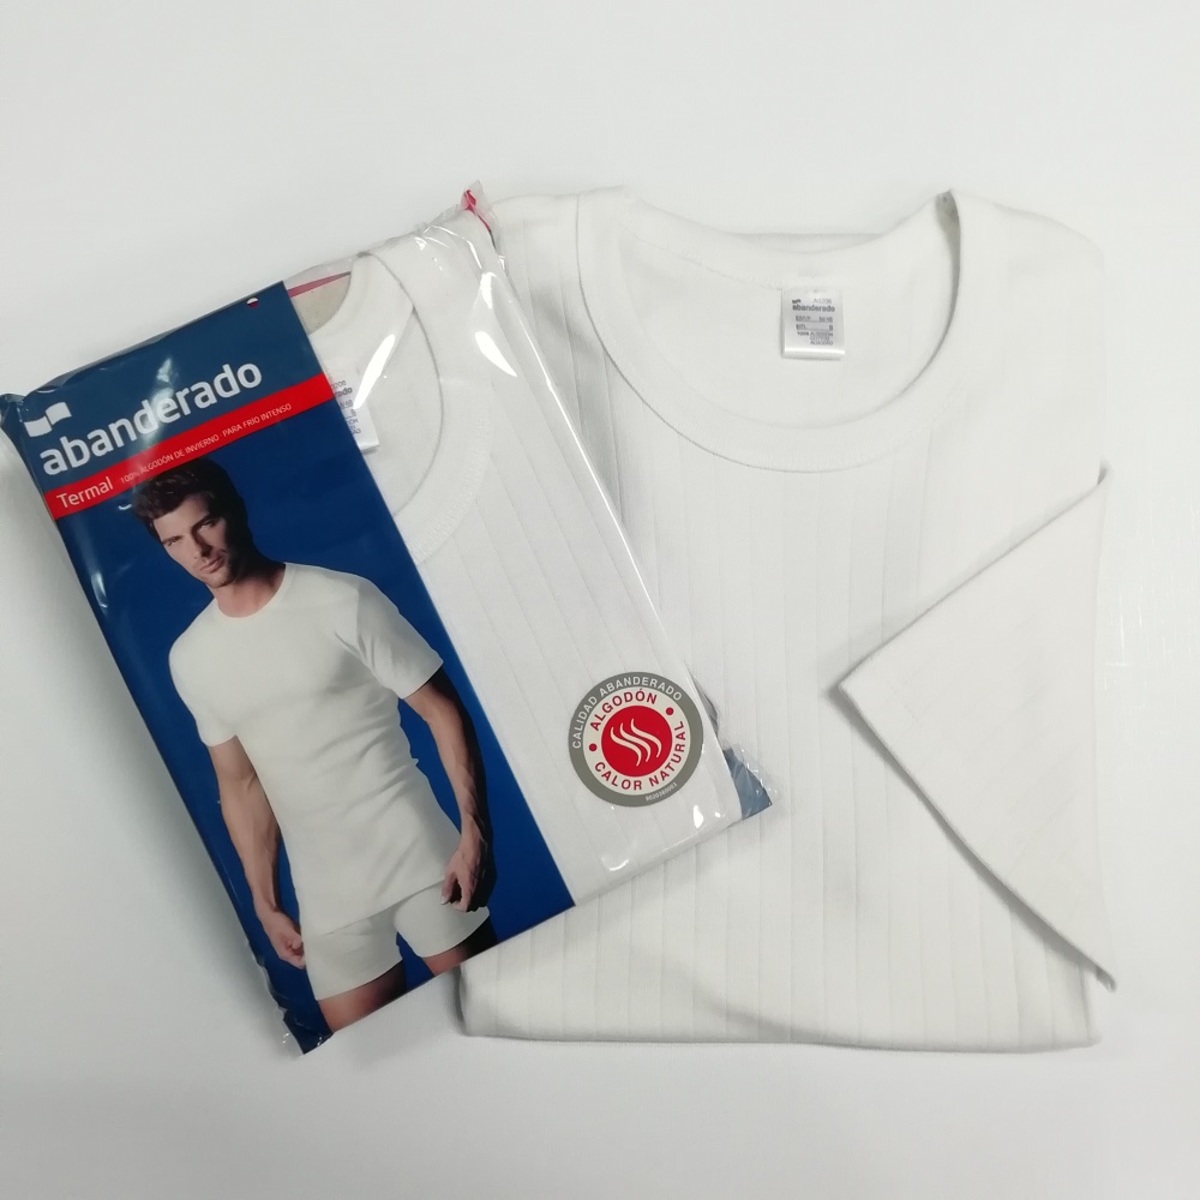 Camiseta de manga corta corporativa 100% algodón